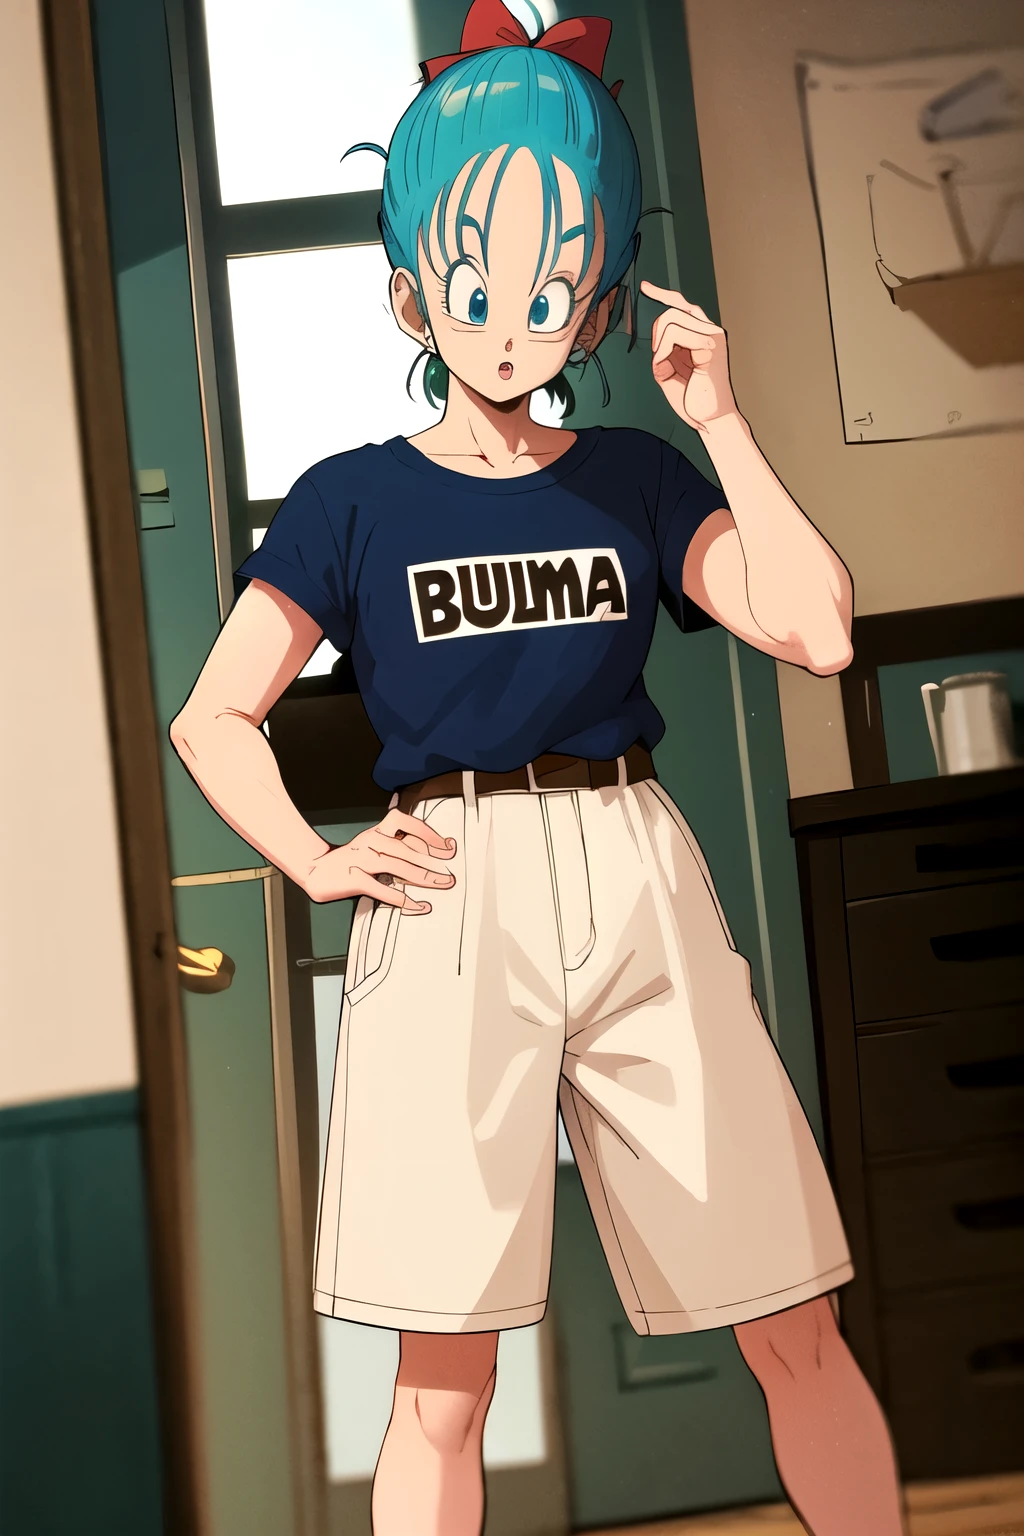 Bulma avec les vêtements de Goku